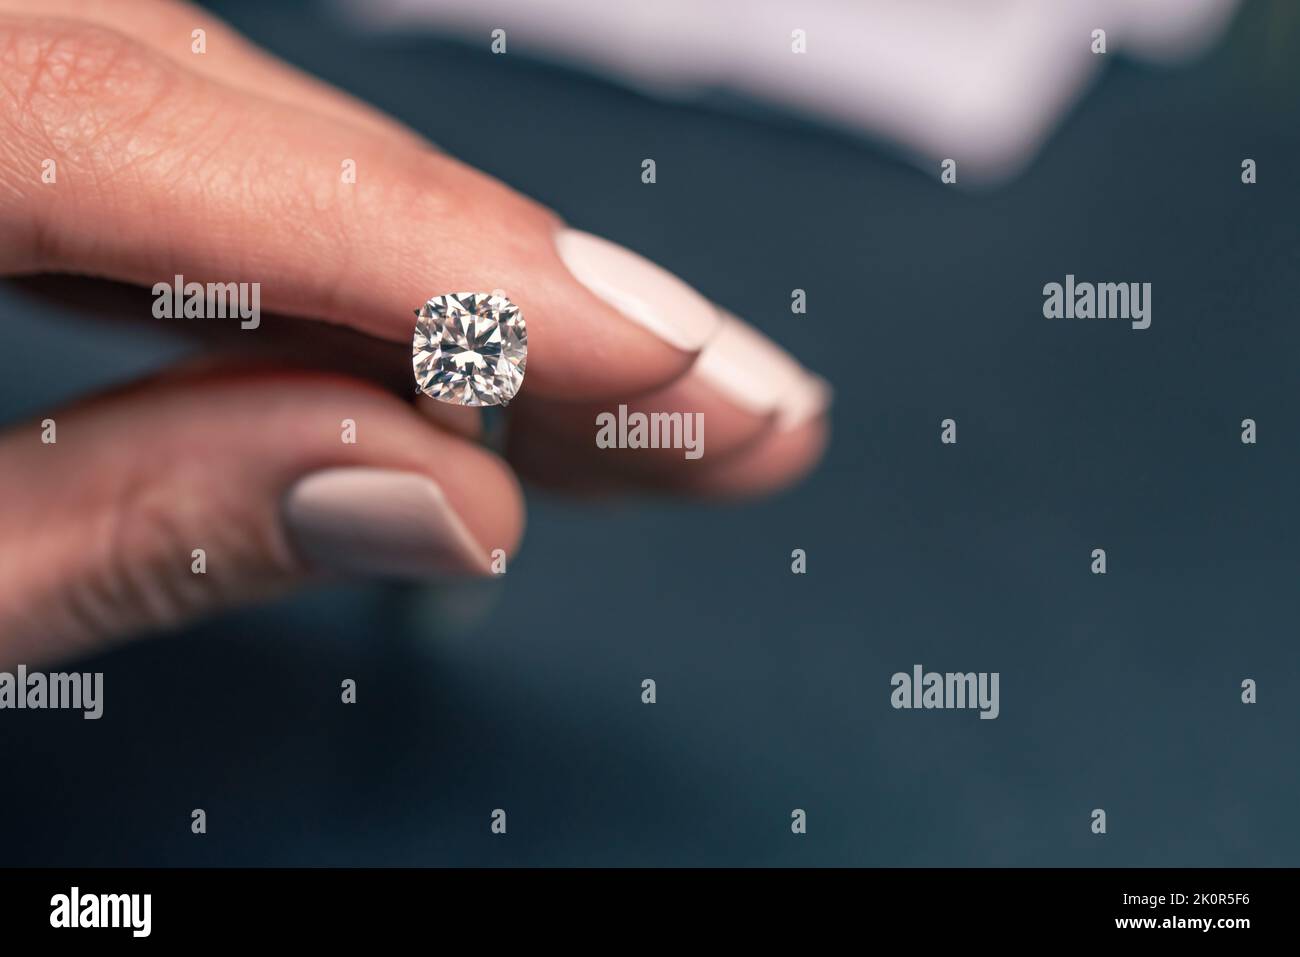 Woman Holding a Diamond With Tweezers Stock Photo